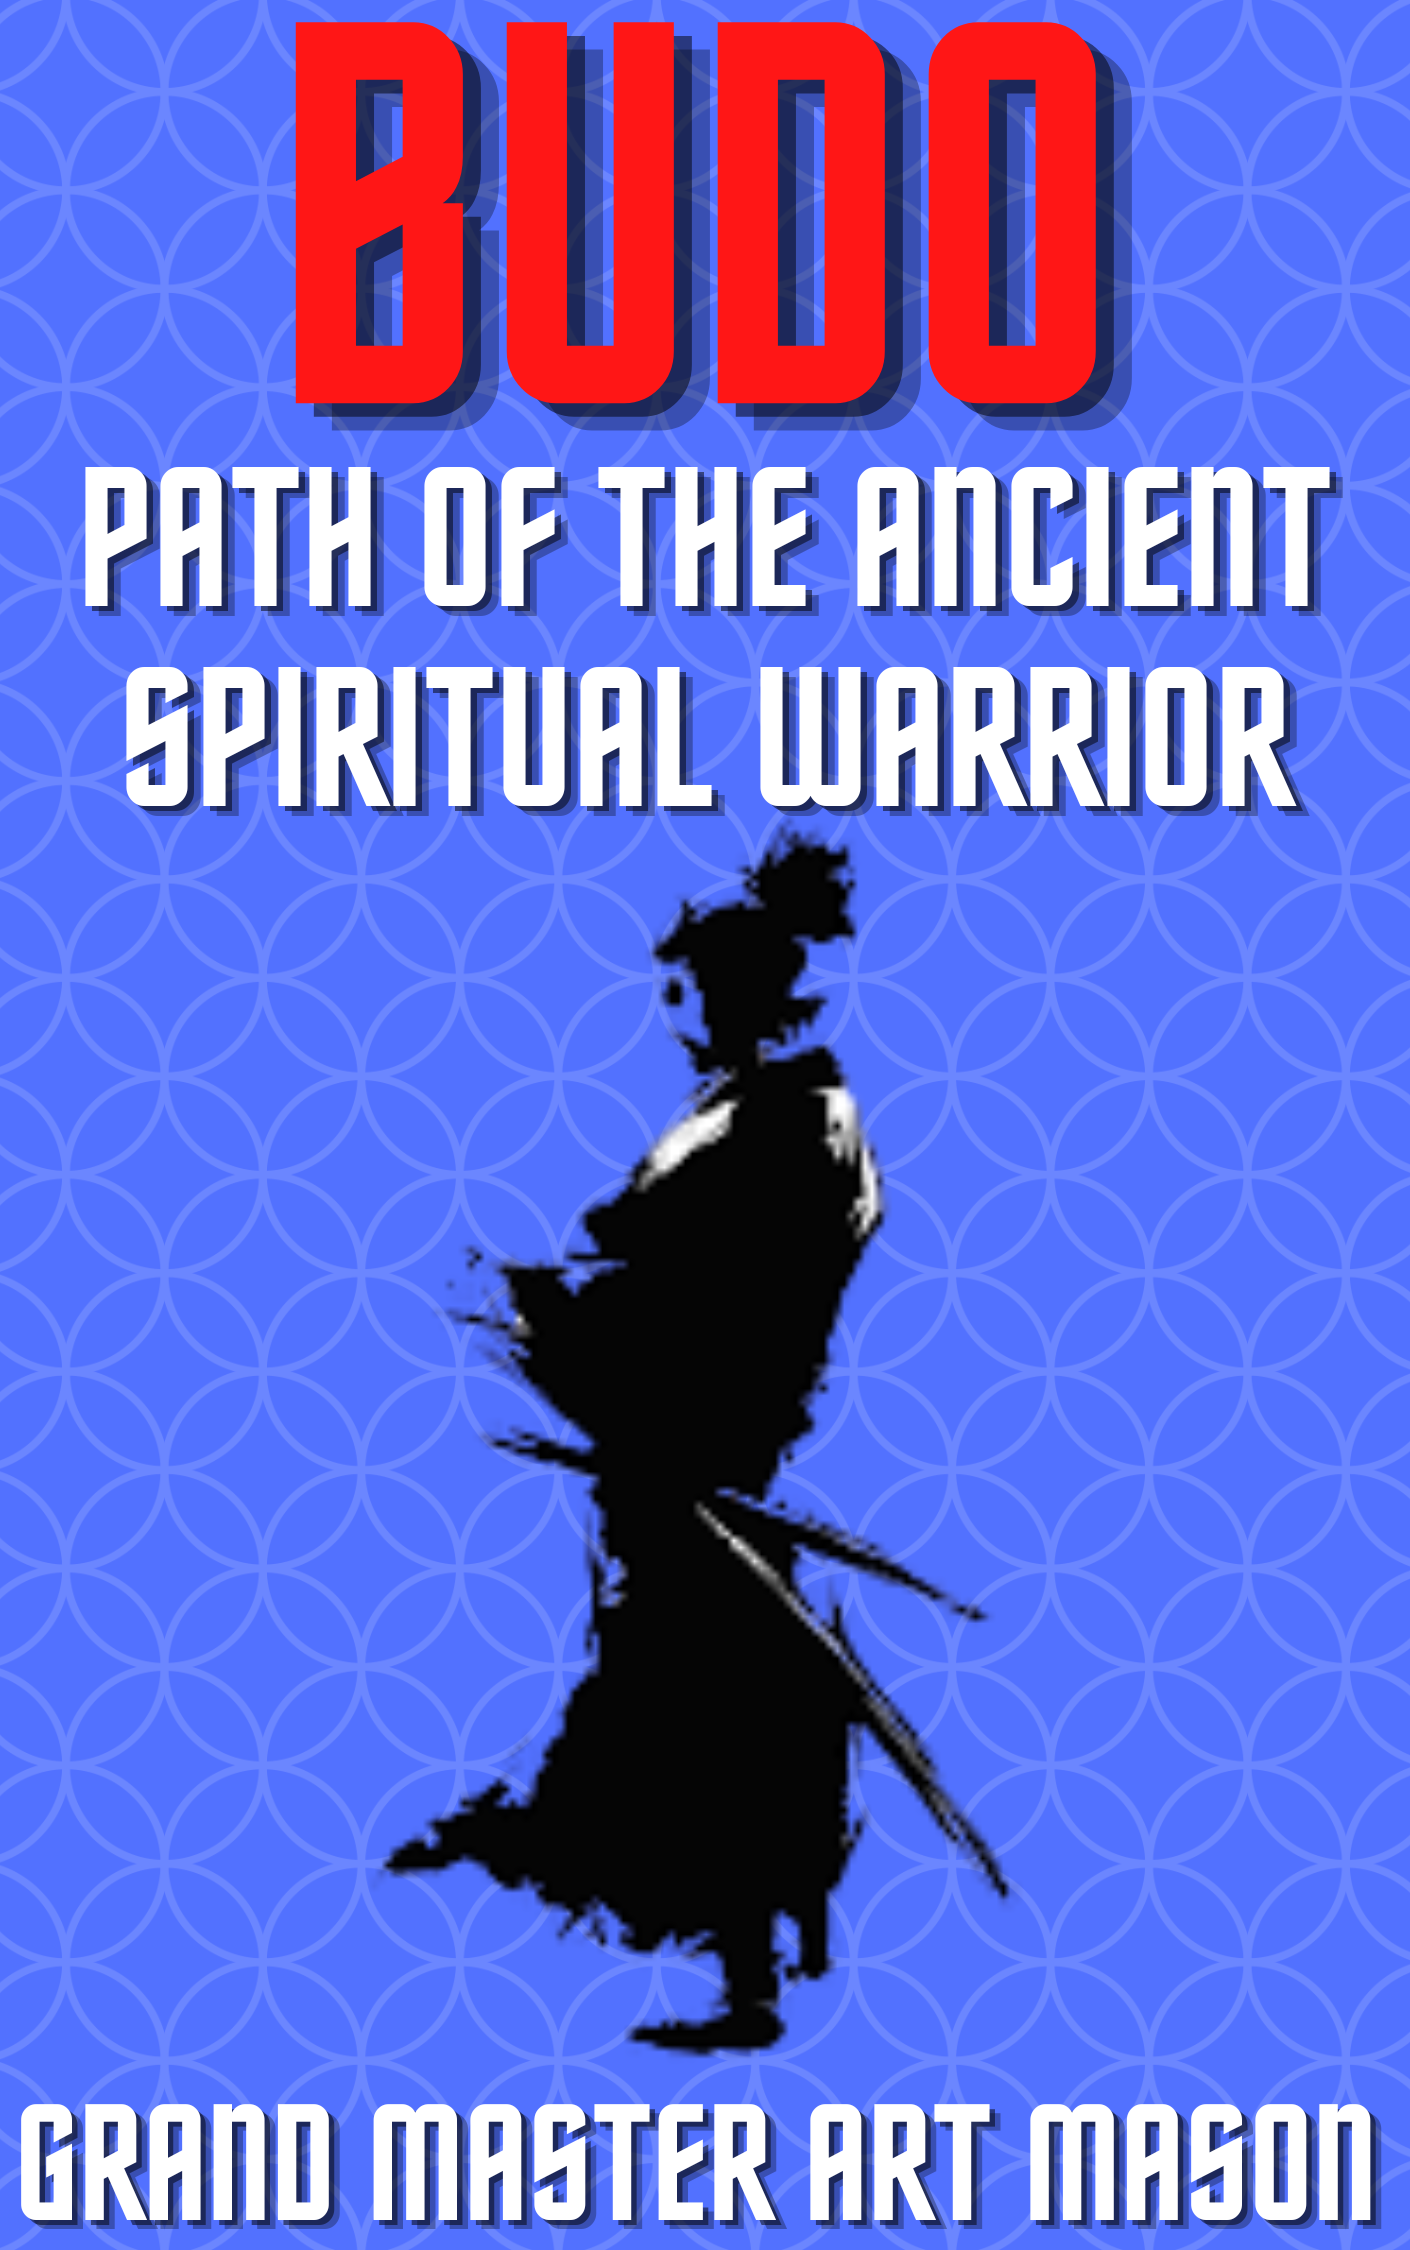 ** Budo: Path of the Ancient Spiritual Warrior